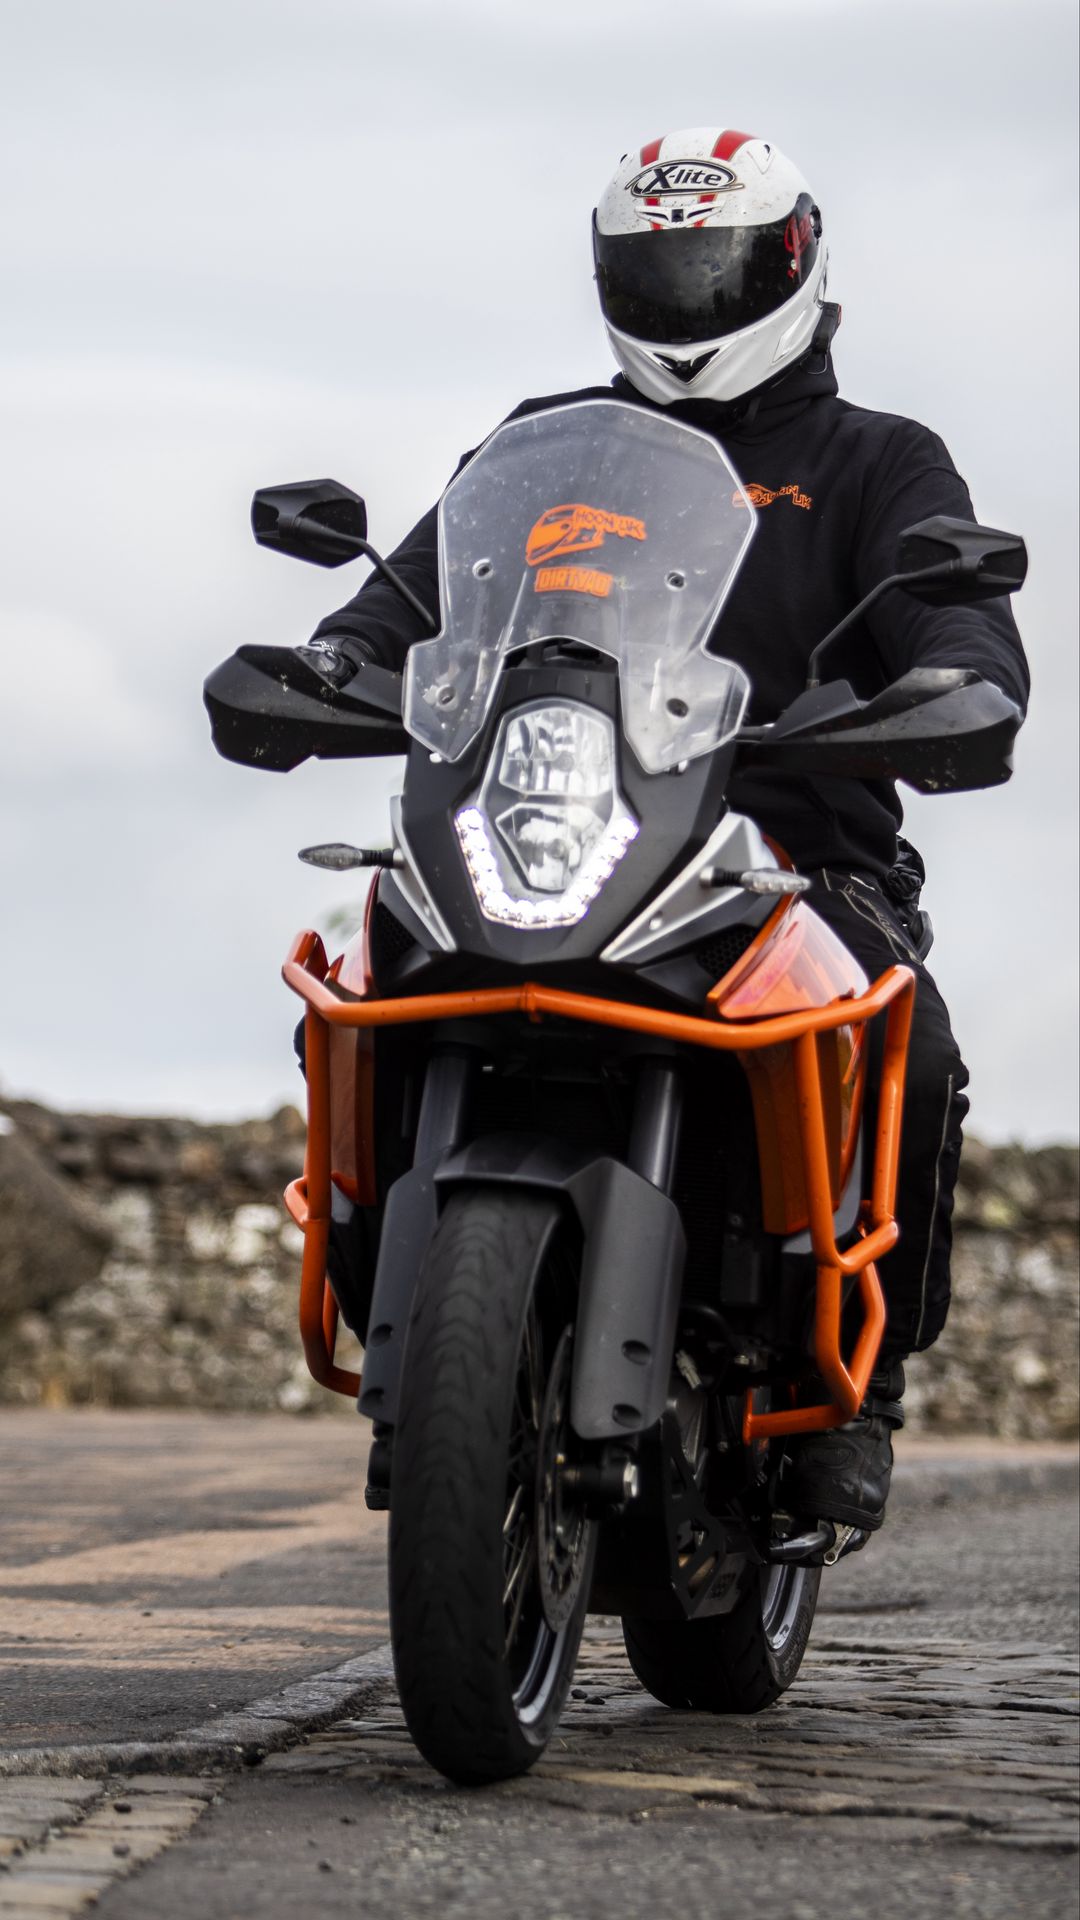 1080x1920 Wallpaper motorcycle, bike, motorcyclist, helmet, road